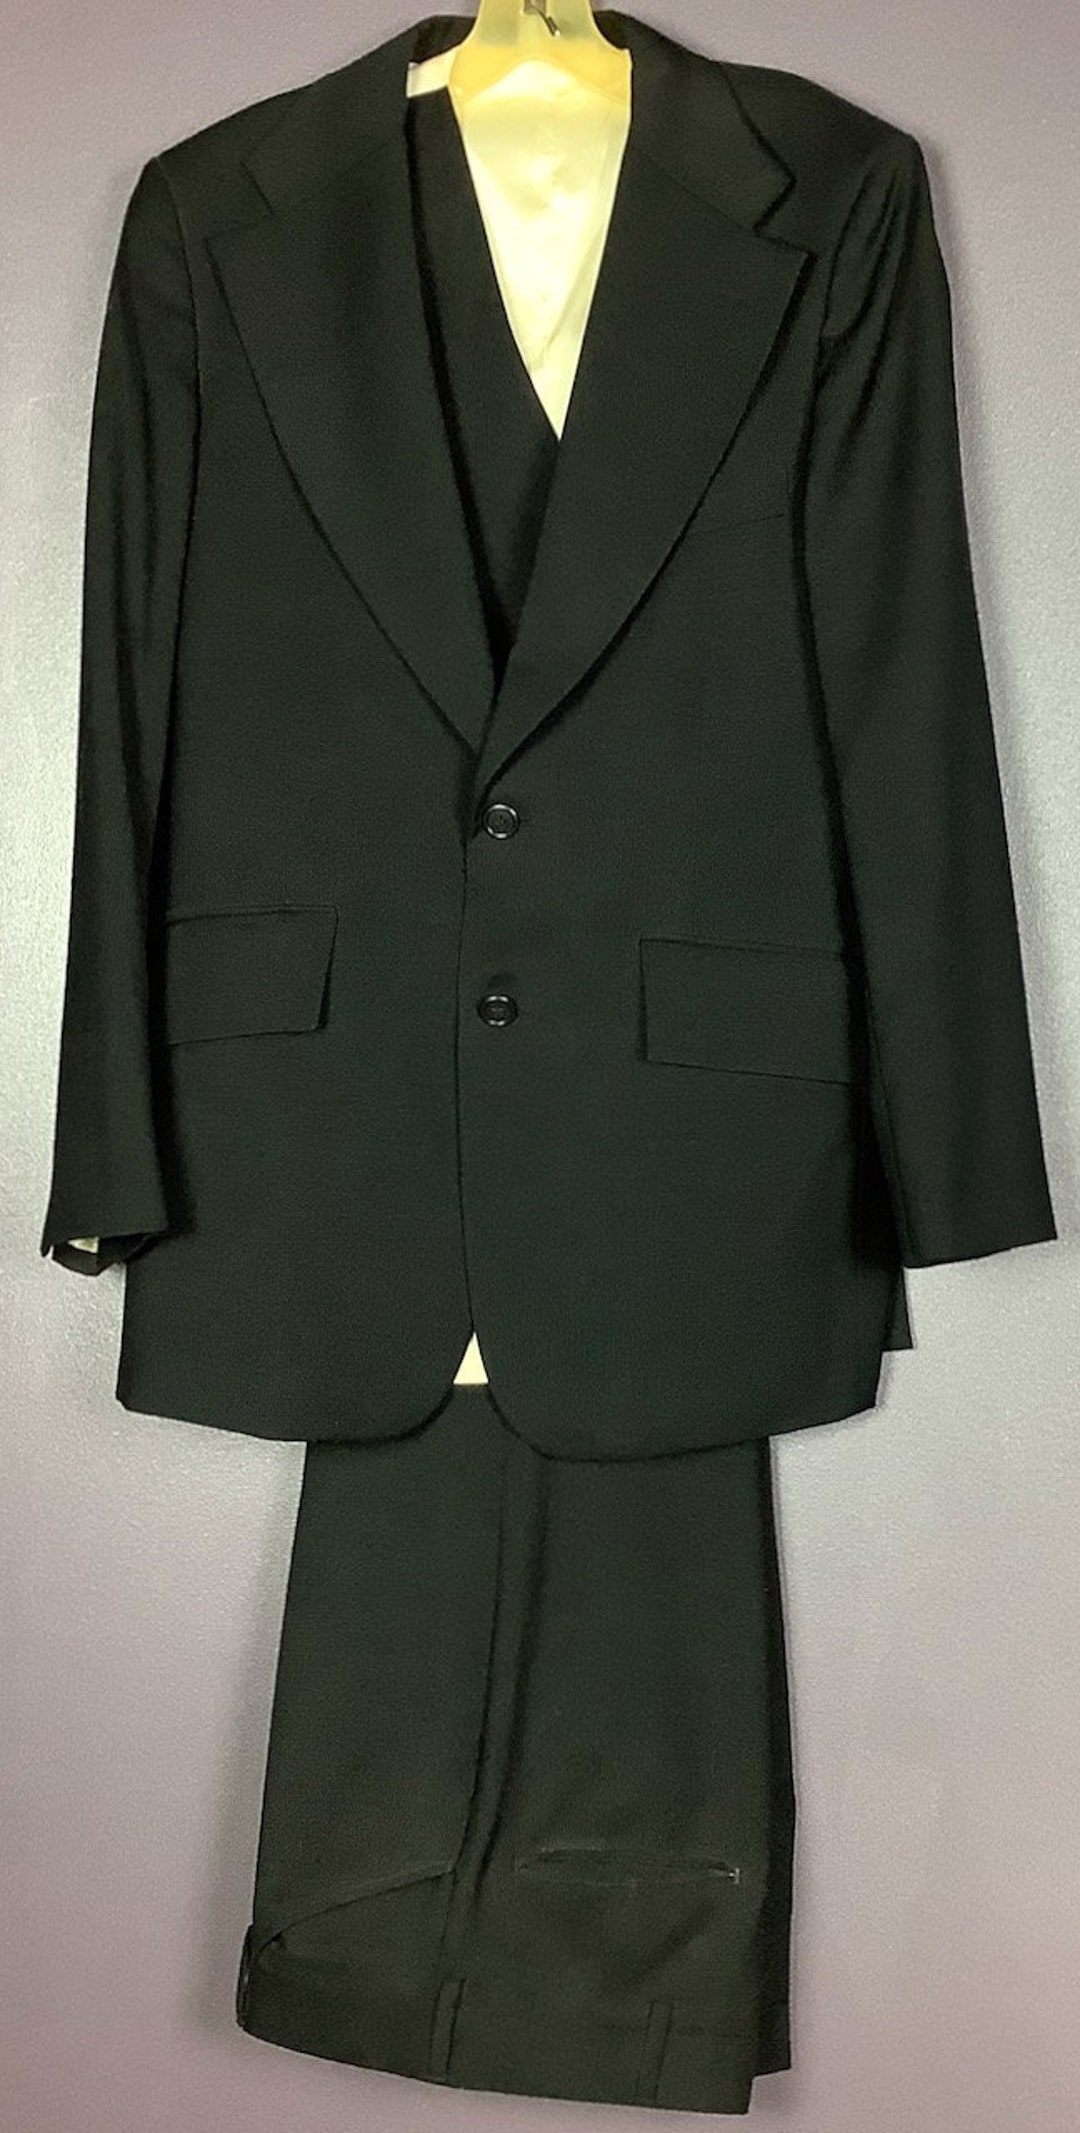 Vintage 1973 Givenchy Men's Suit - Etsy